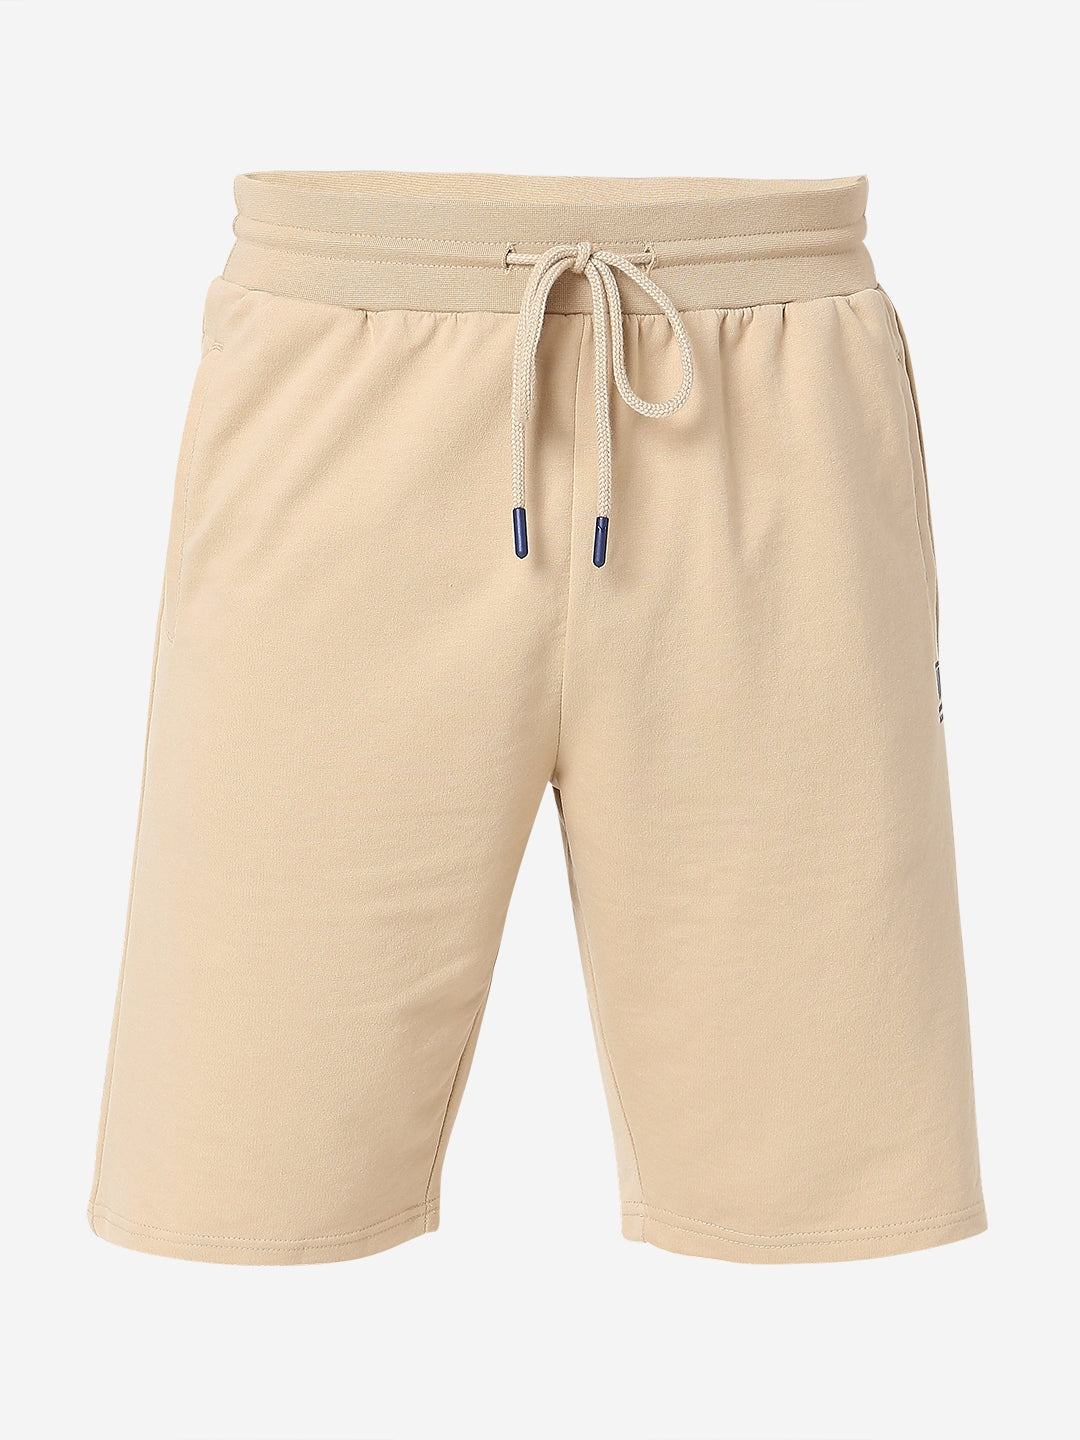 Underjeans by Spykar Men Premium Knitted Beige Shorts